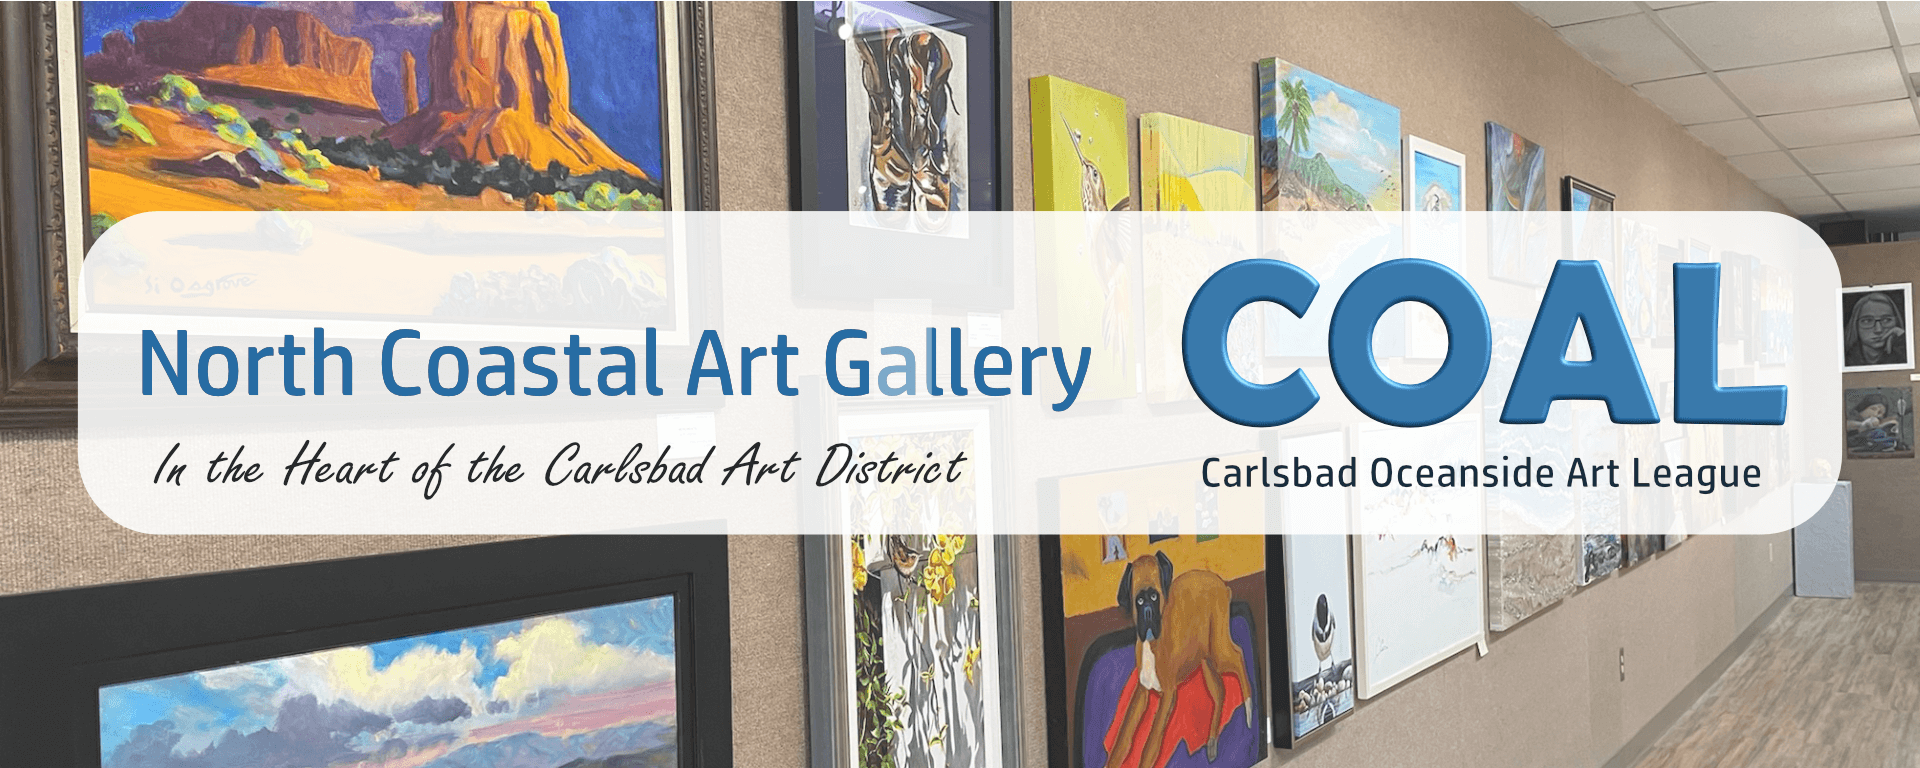 North Coastal Art Gallery - banner